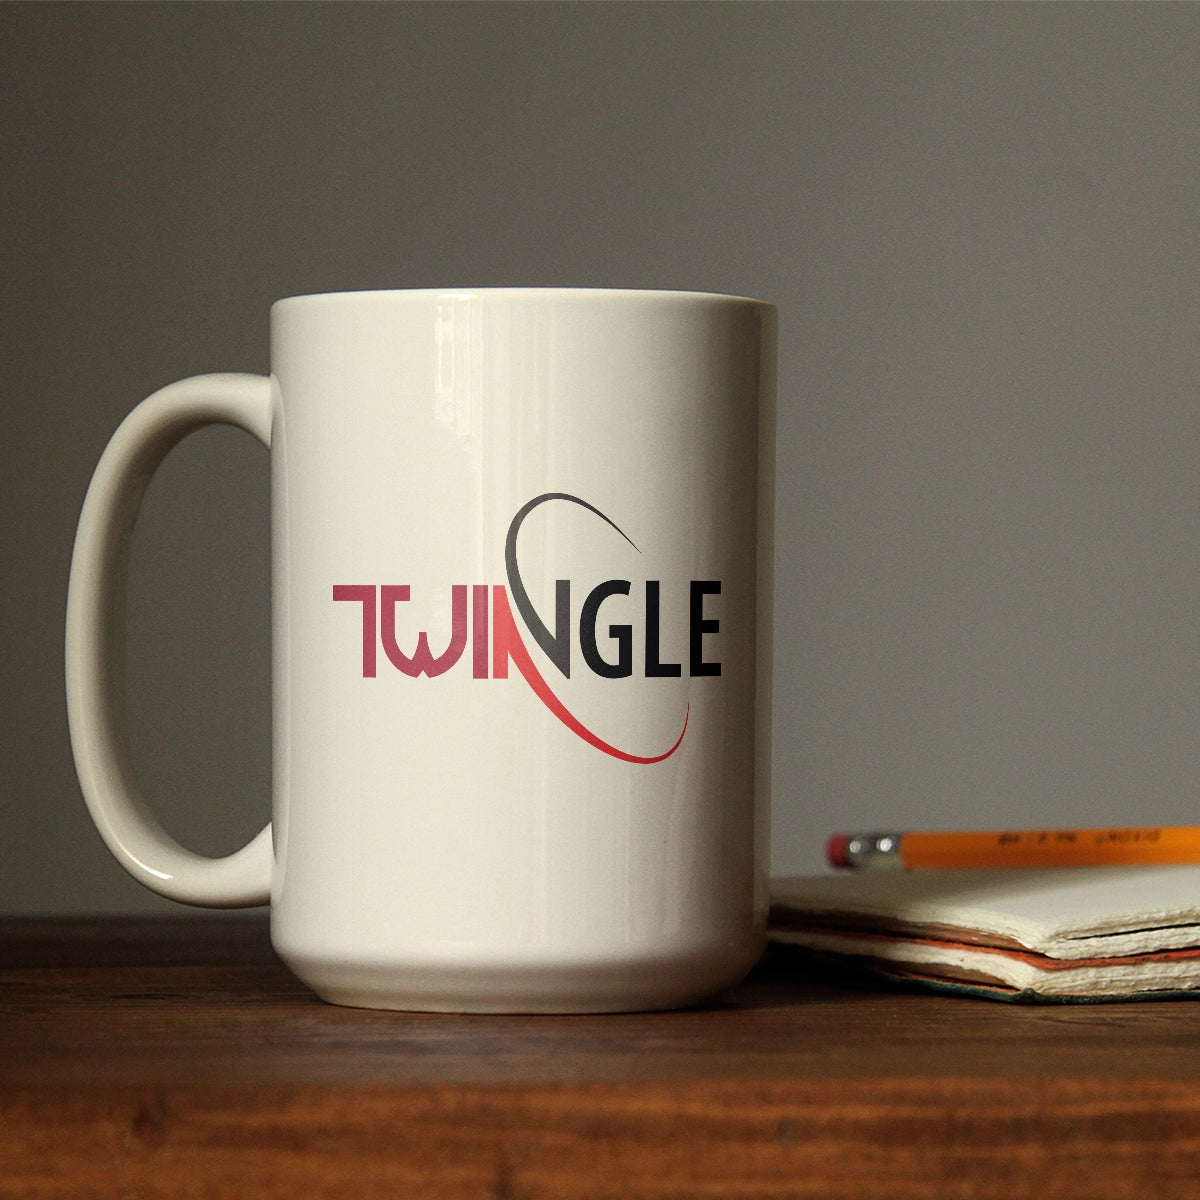 twingle.com